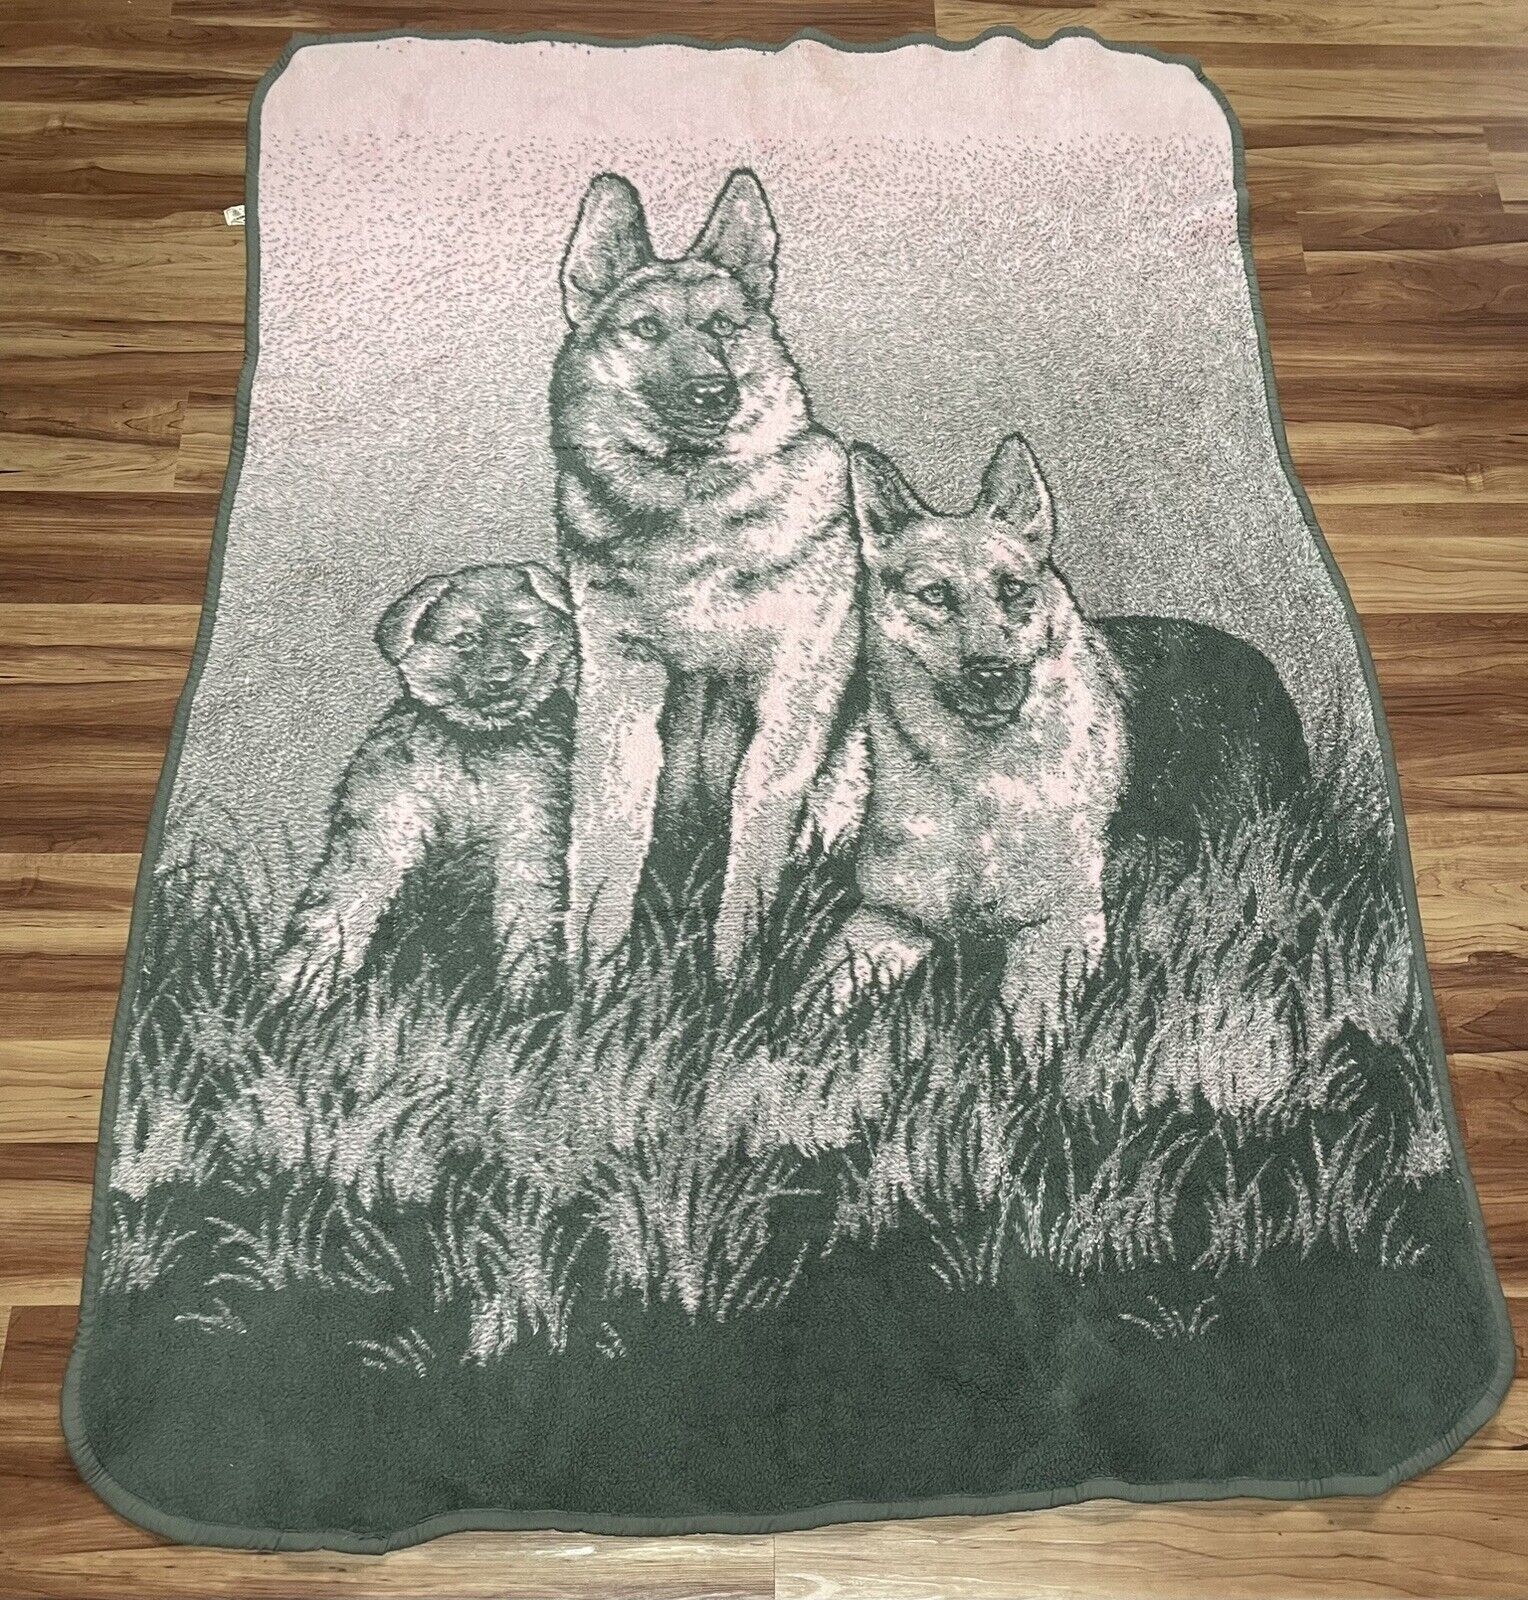 San Marcos Vintage Reversible Blanket Pink Gray Dogs 60x85”